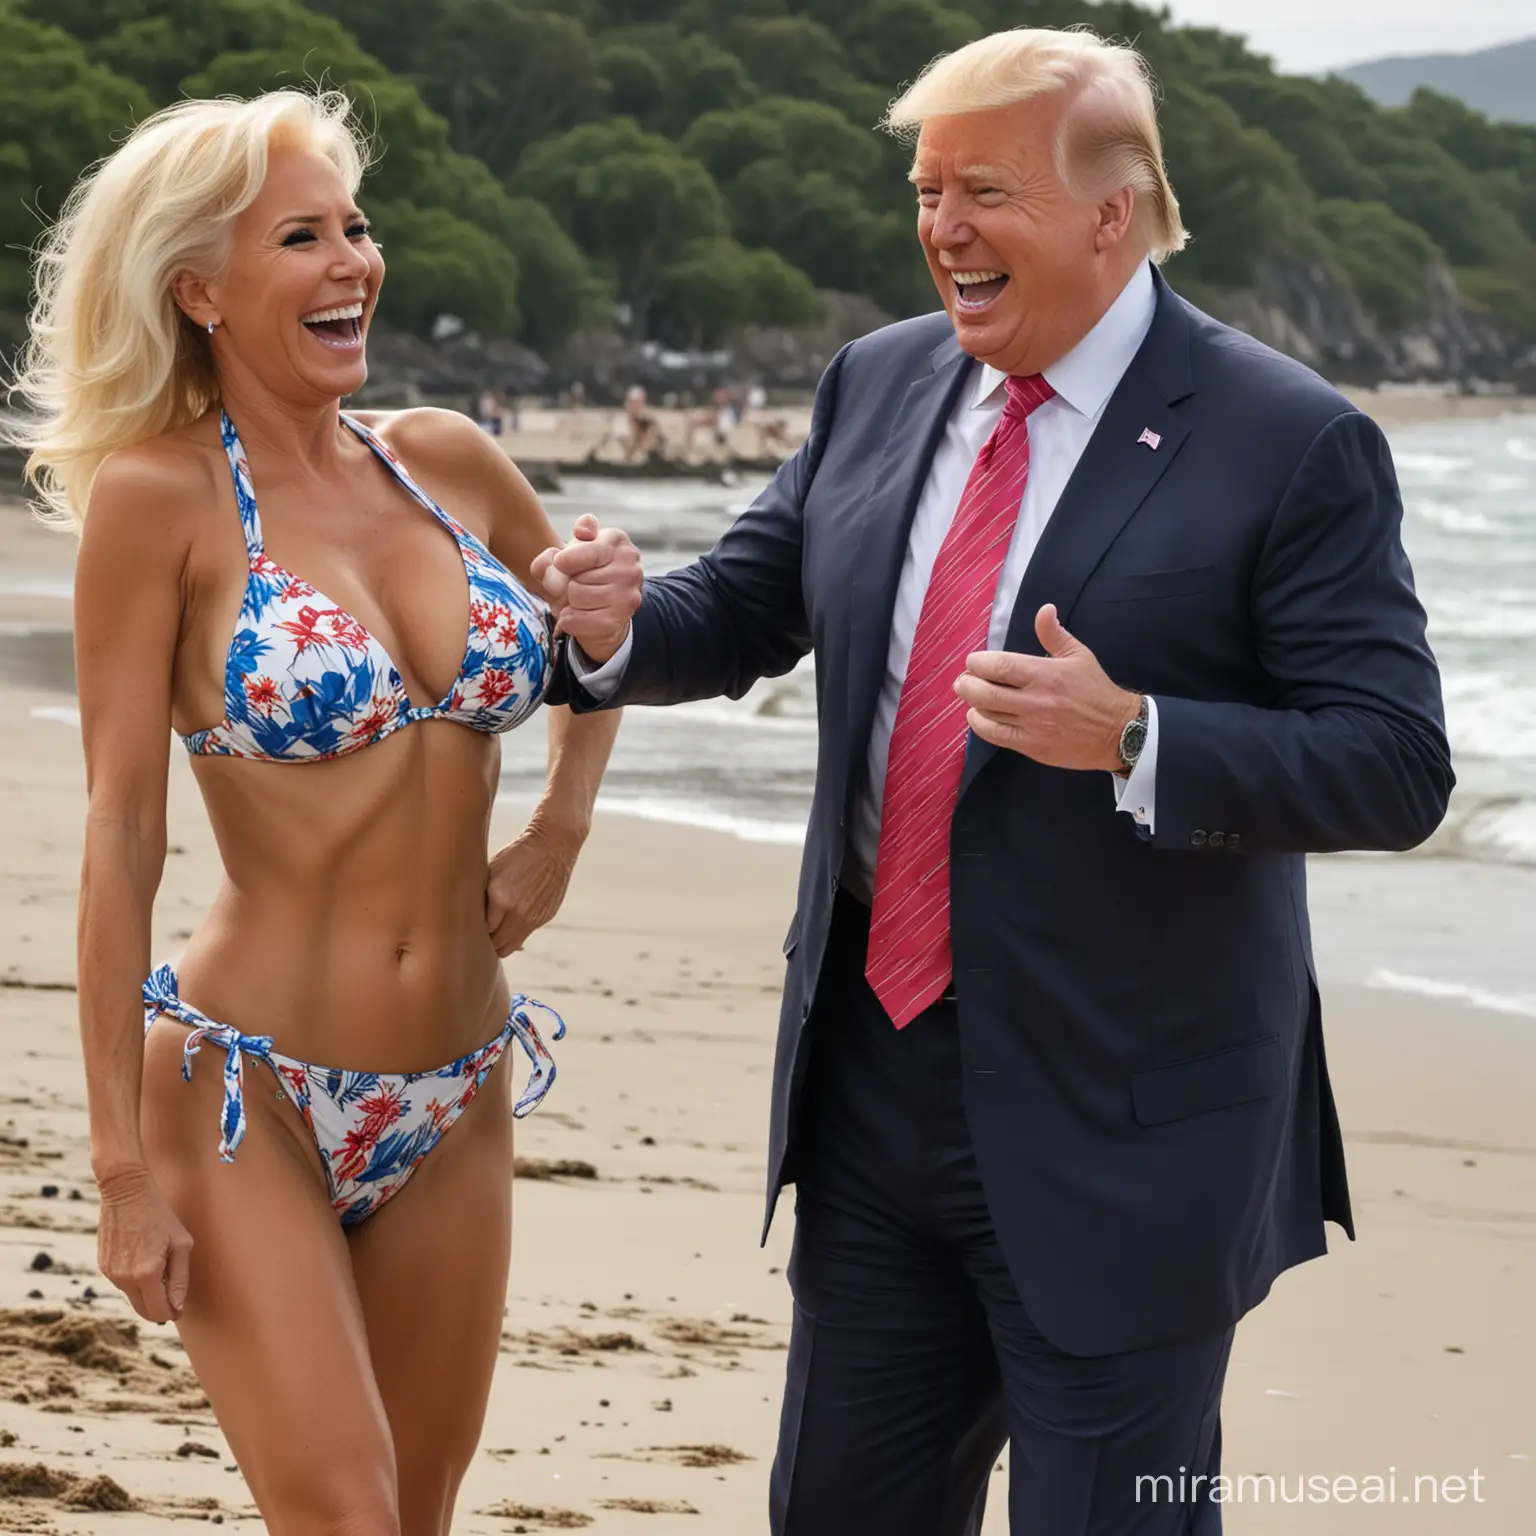 Politicians Parody Donald Trump Dancing in Bikini as Biden Laughs